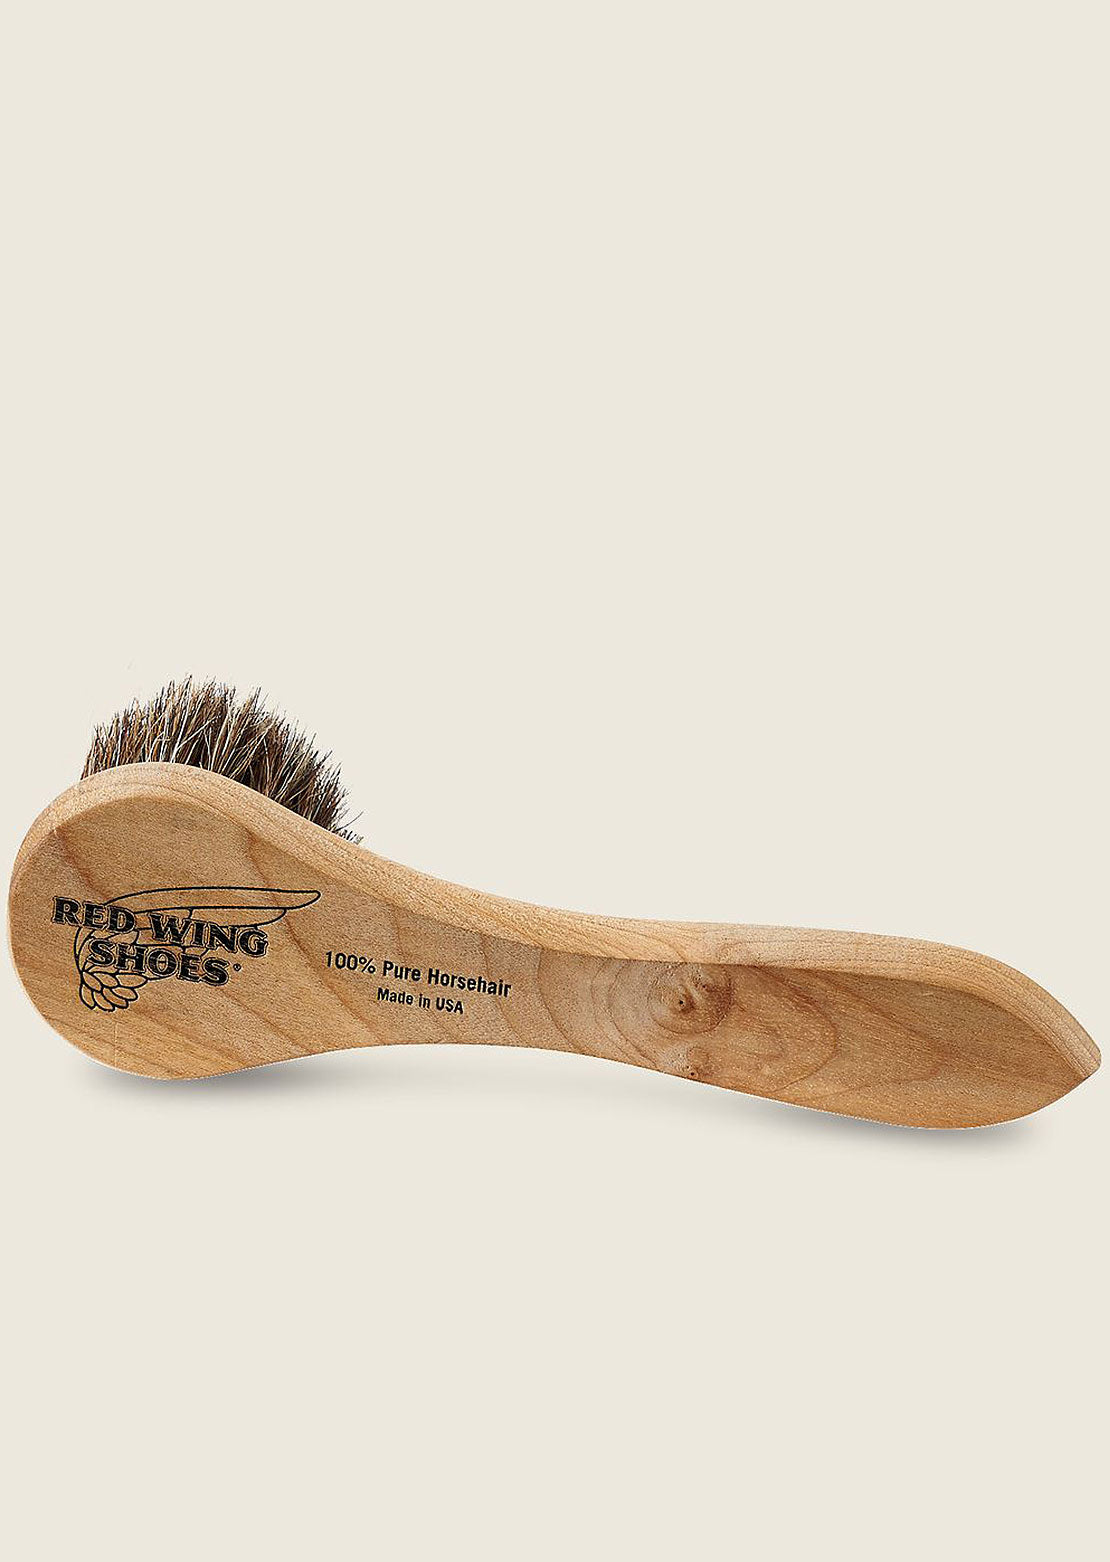 Redwing Dauber Brush